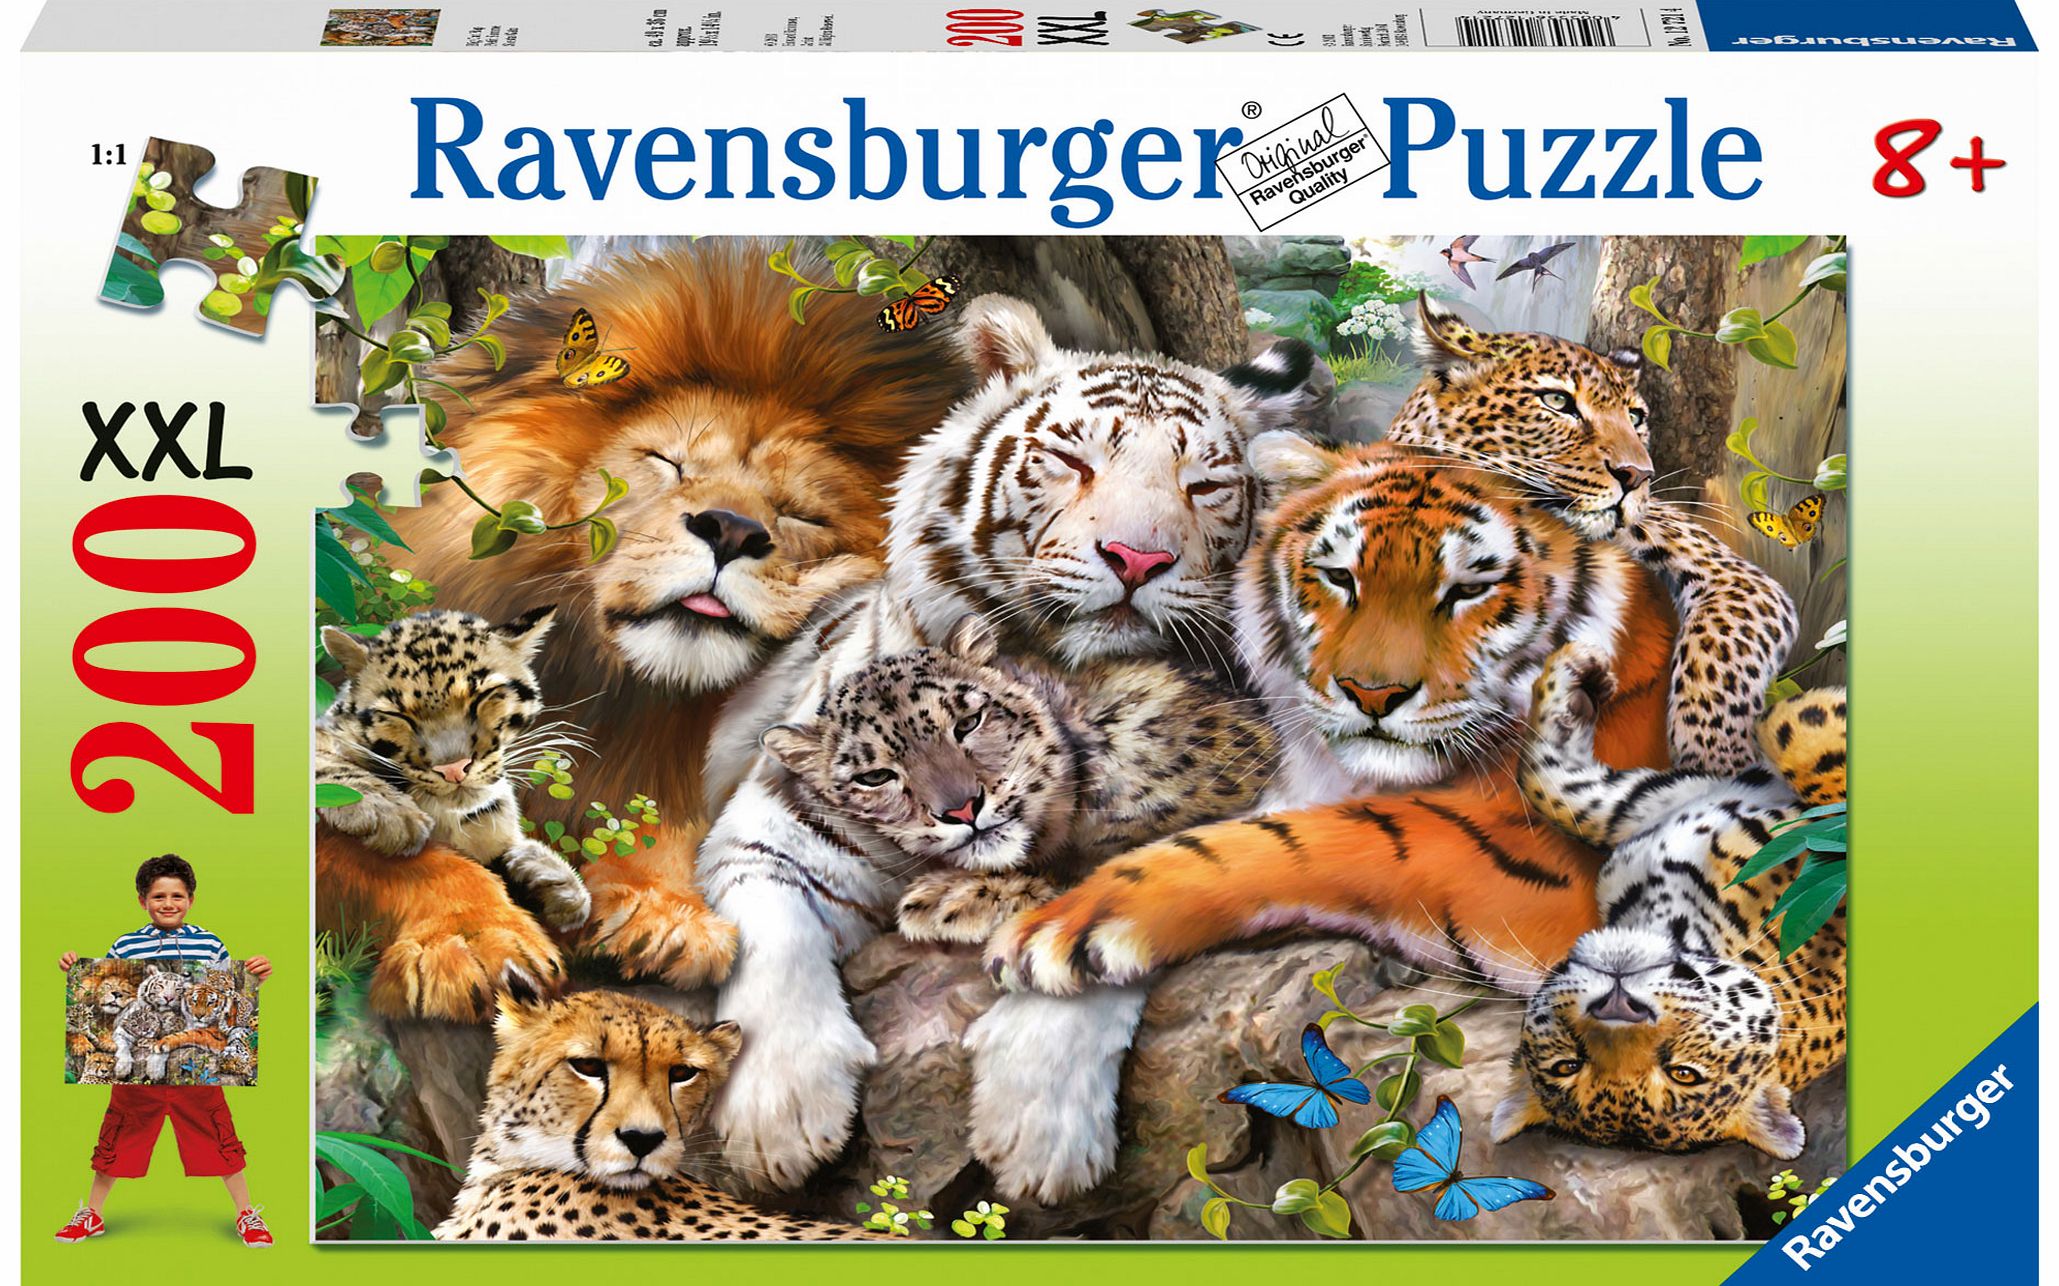 Big Cat Nap 200 Piece Jigsaw Puzzle - XXL